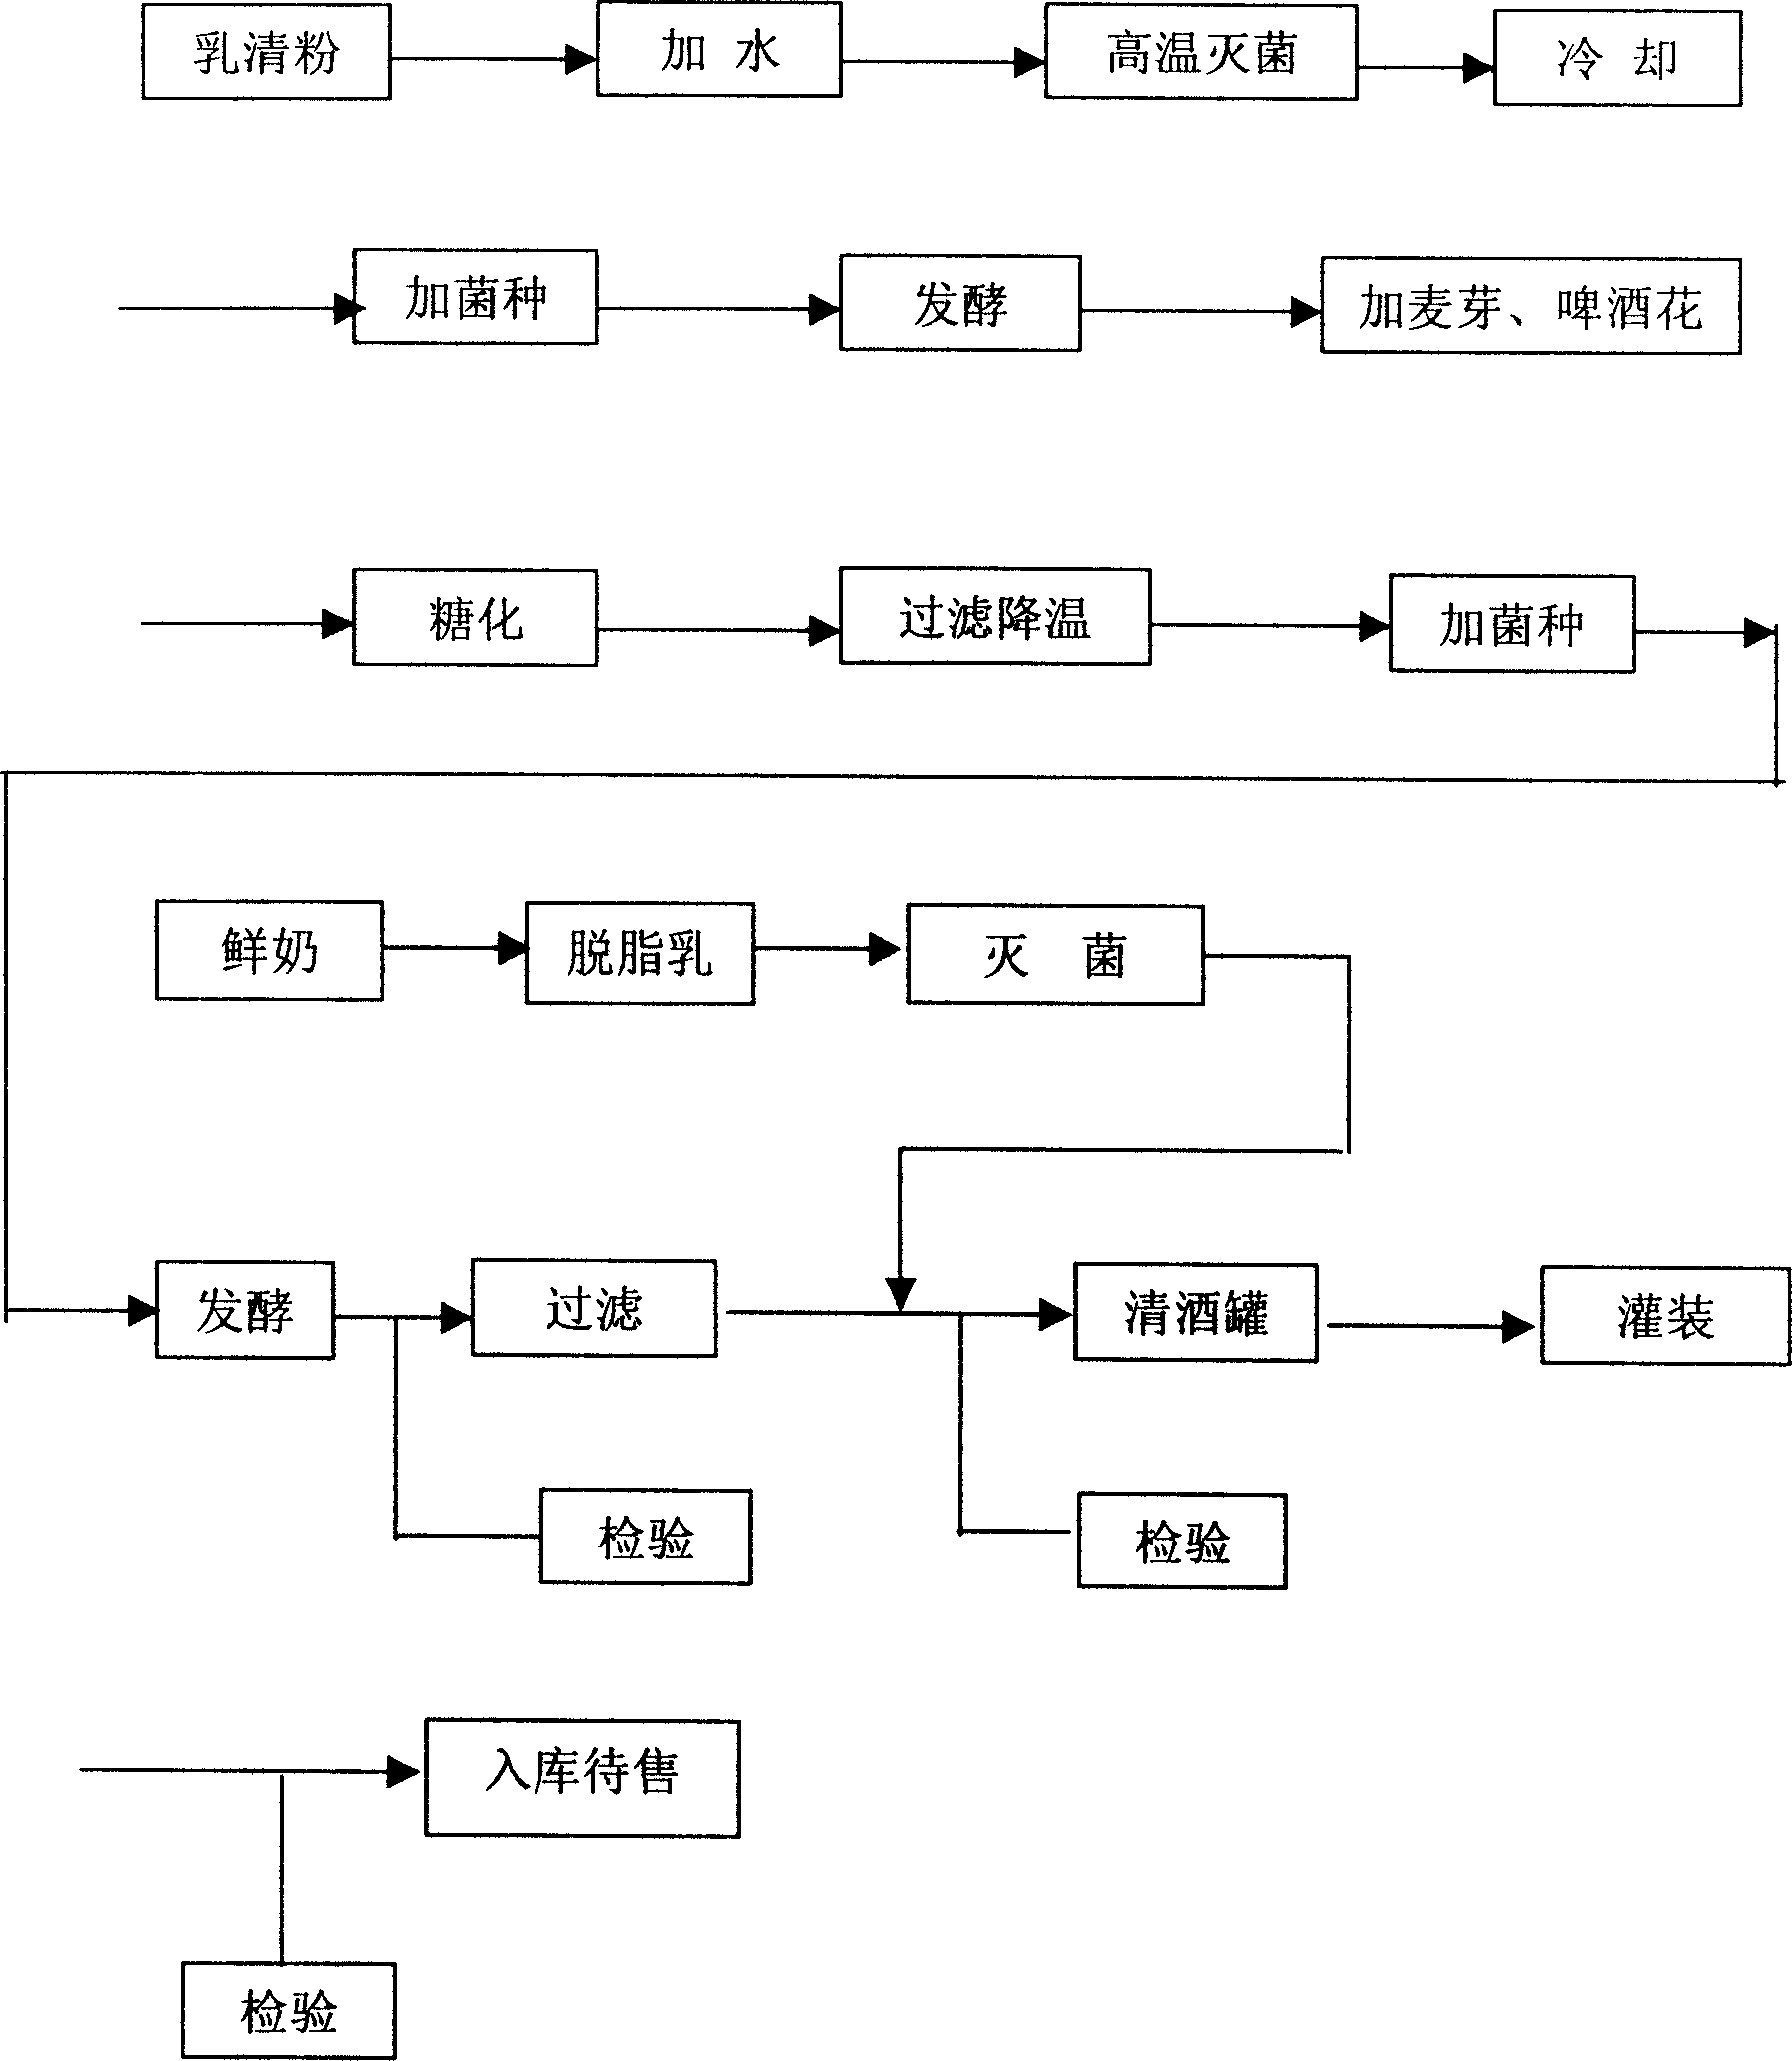 Formula of milk beer and making process